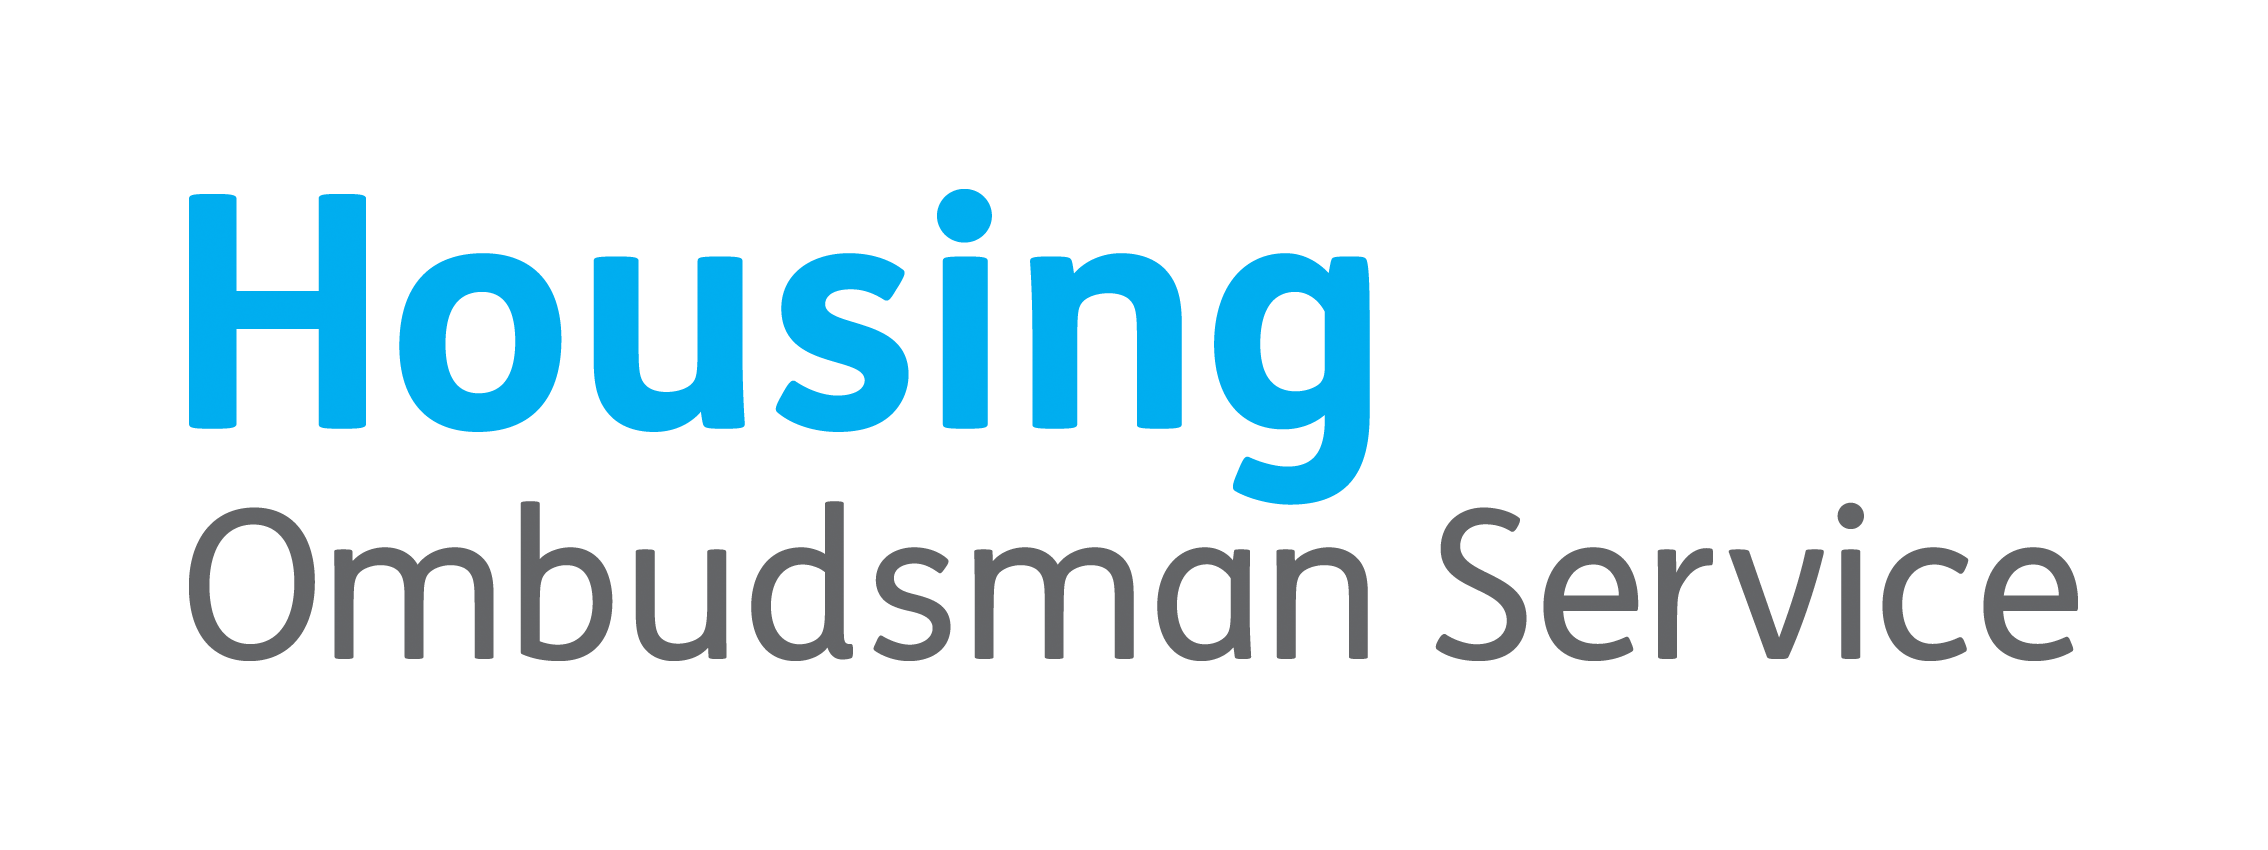 Housing Ombudsman Service